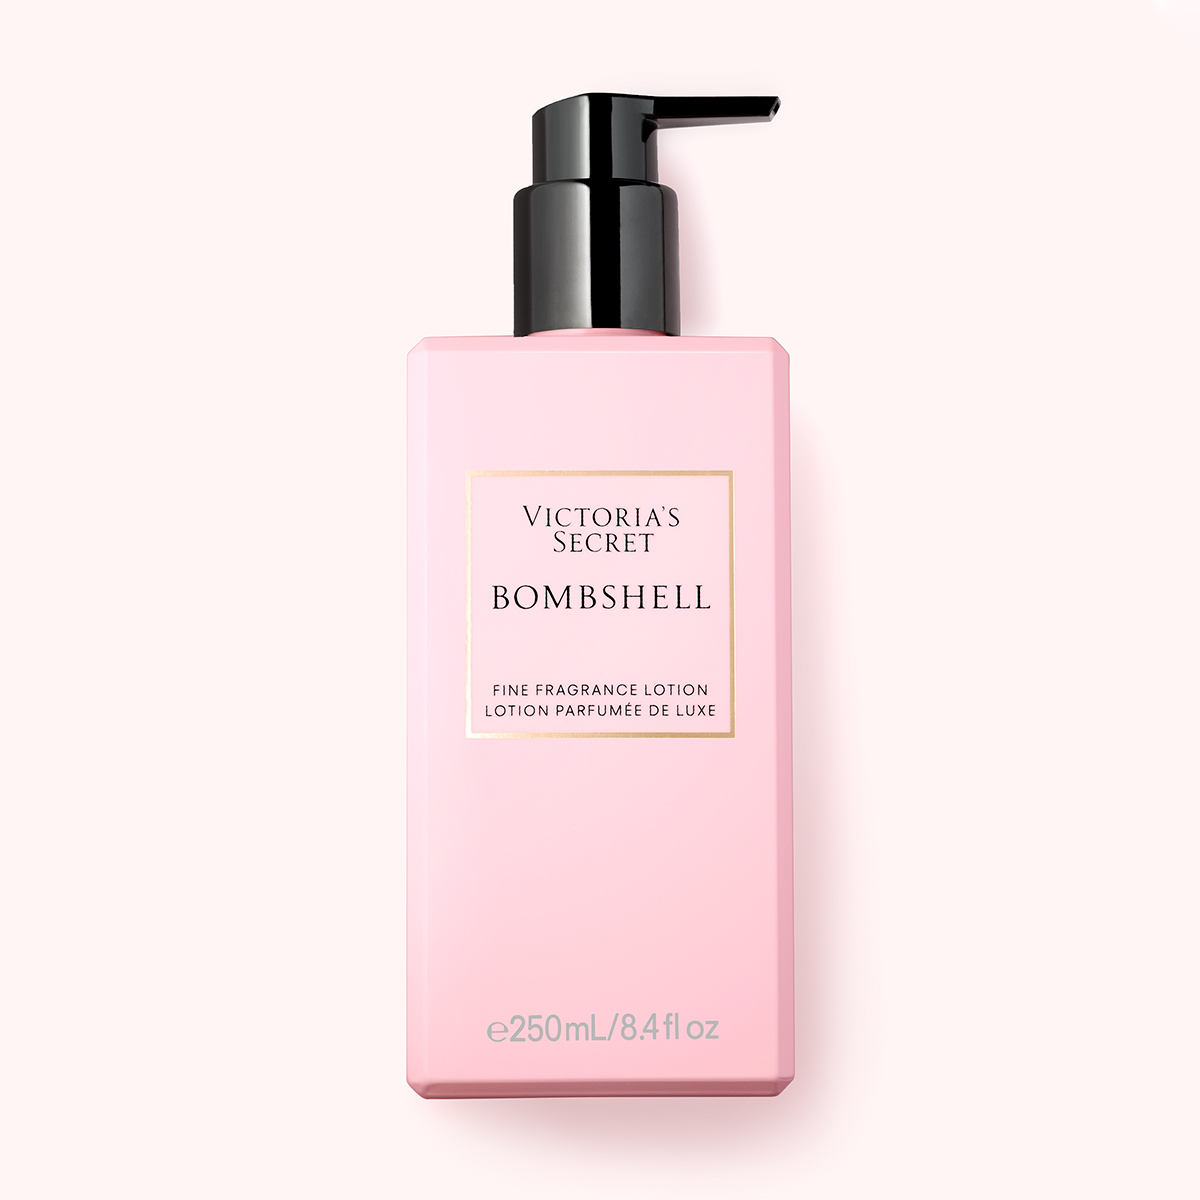 New Look: Bombshell Eau de Parfum - Victoria's Secret